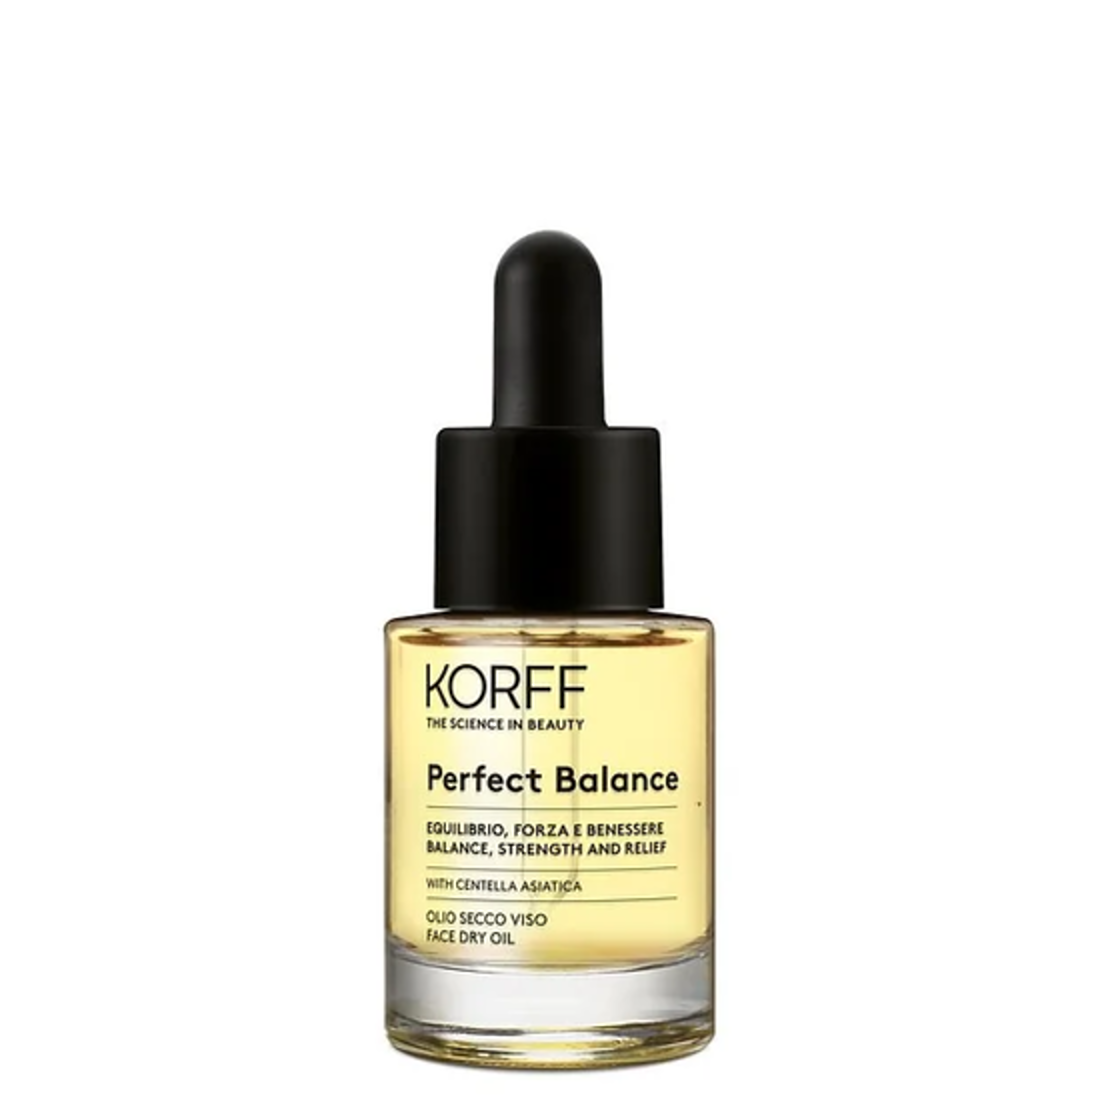 korff-perfect balance face dry oil